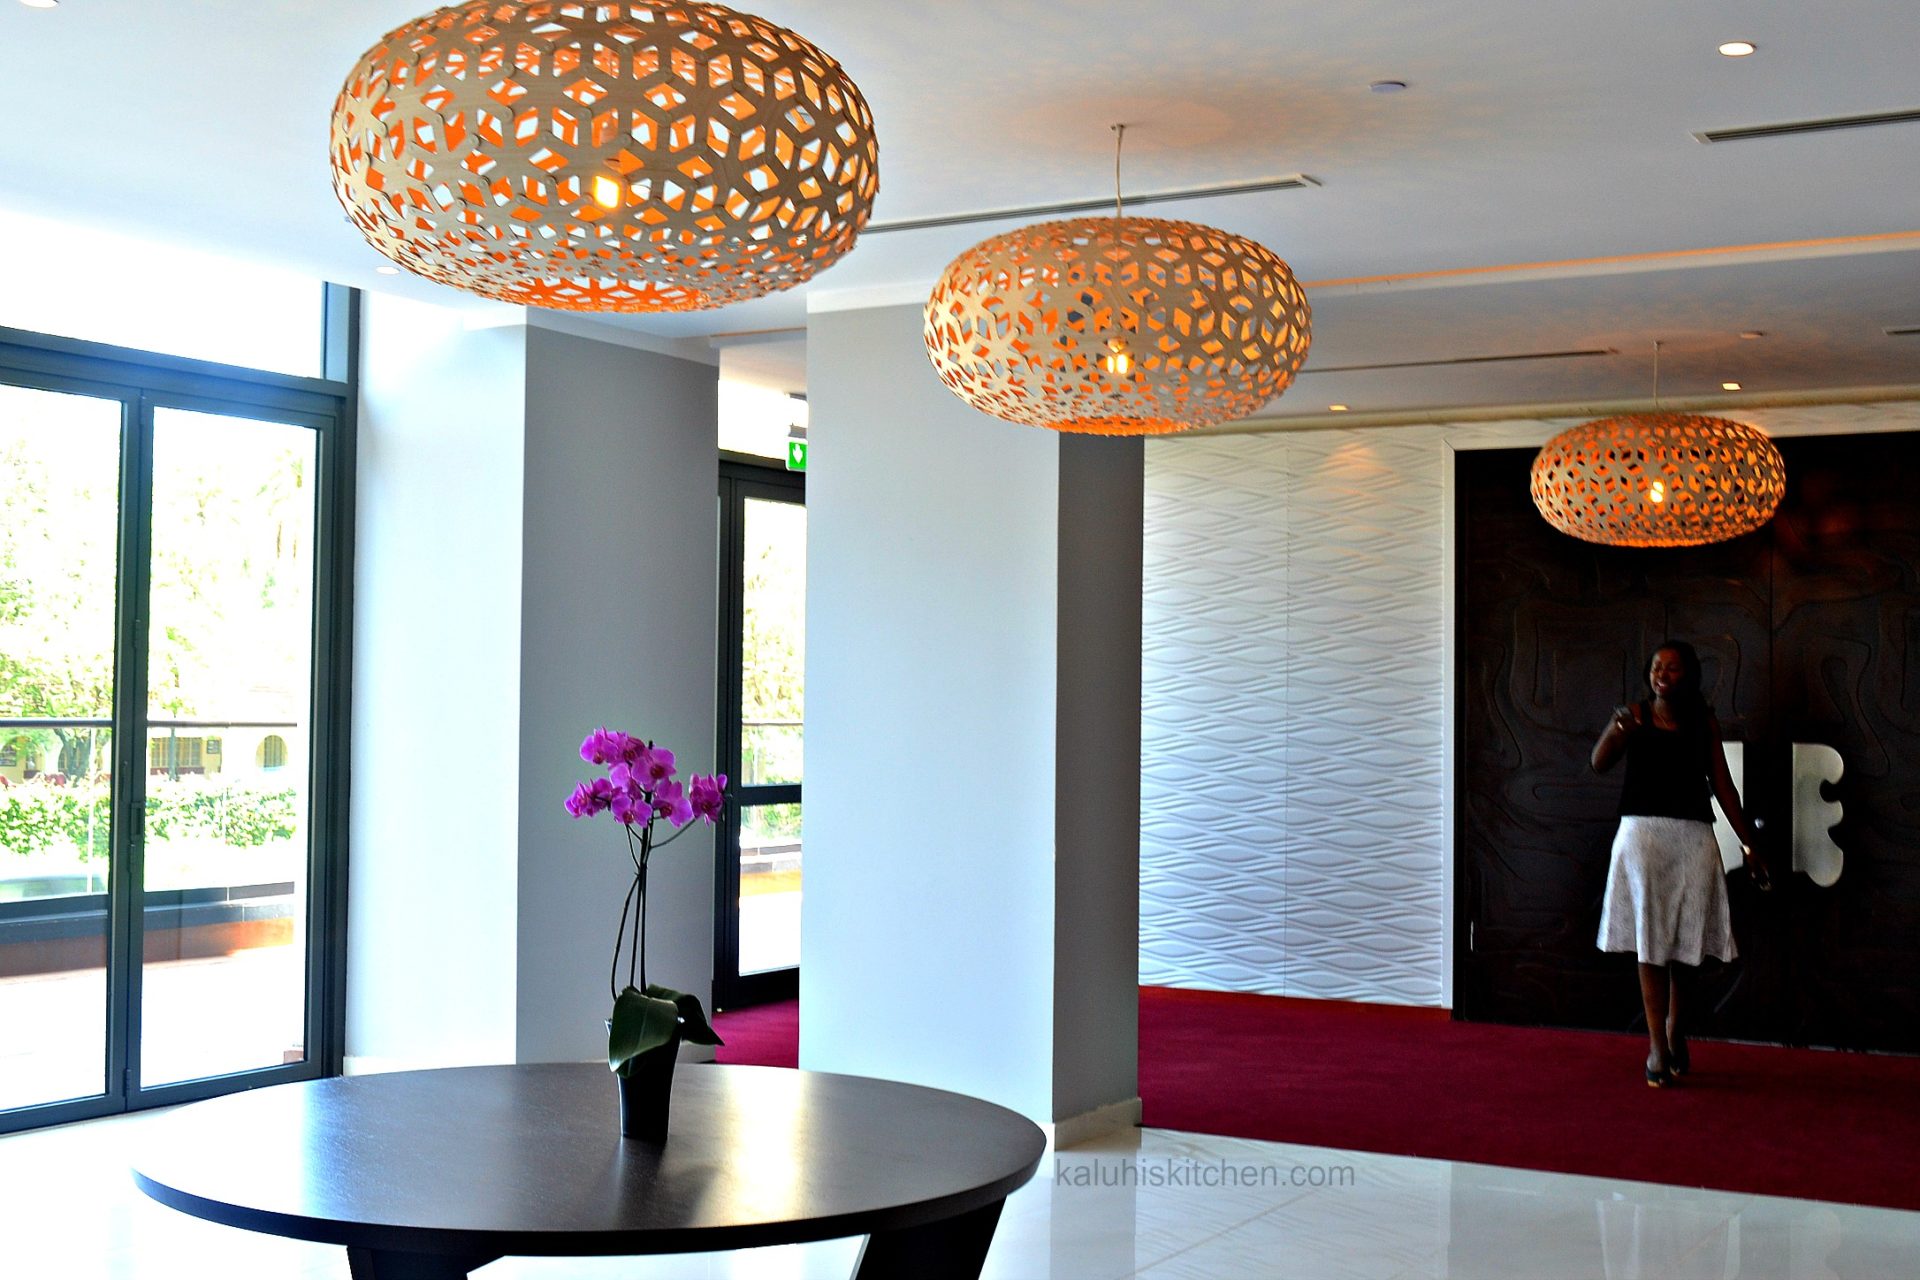 minimalist spaces with plenty of natural light characterize radison blu nairobi_kaluhiskitchen.com